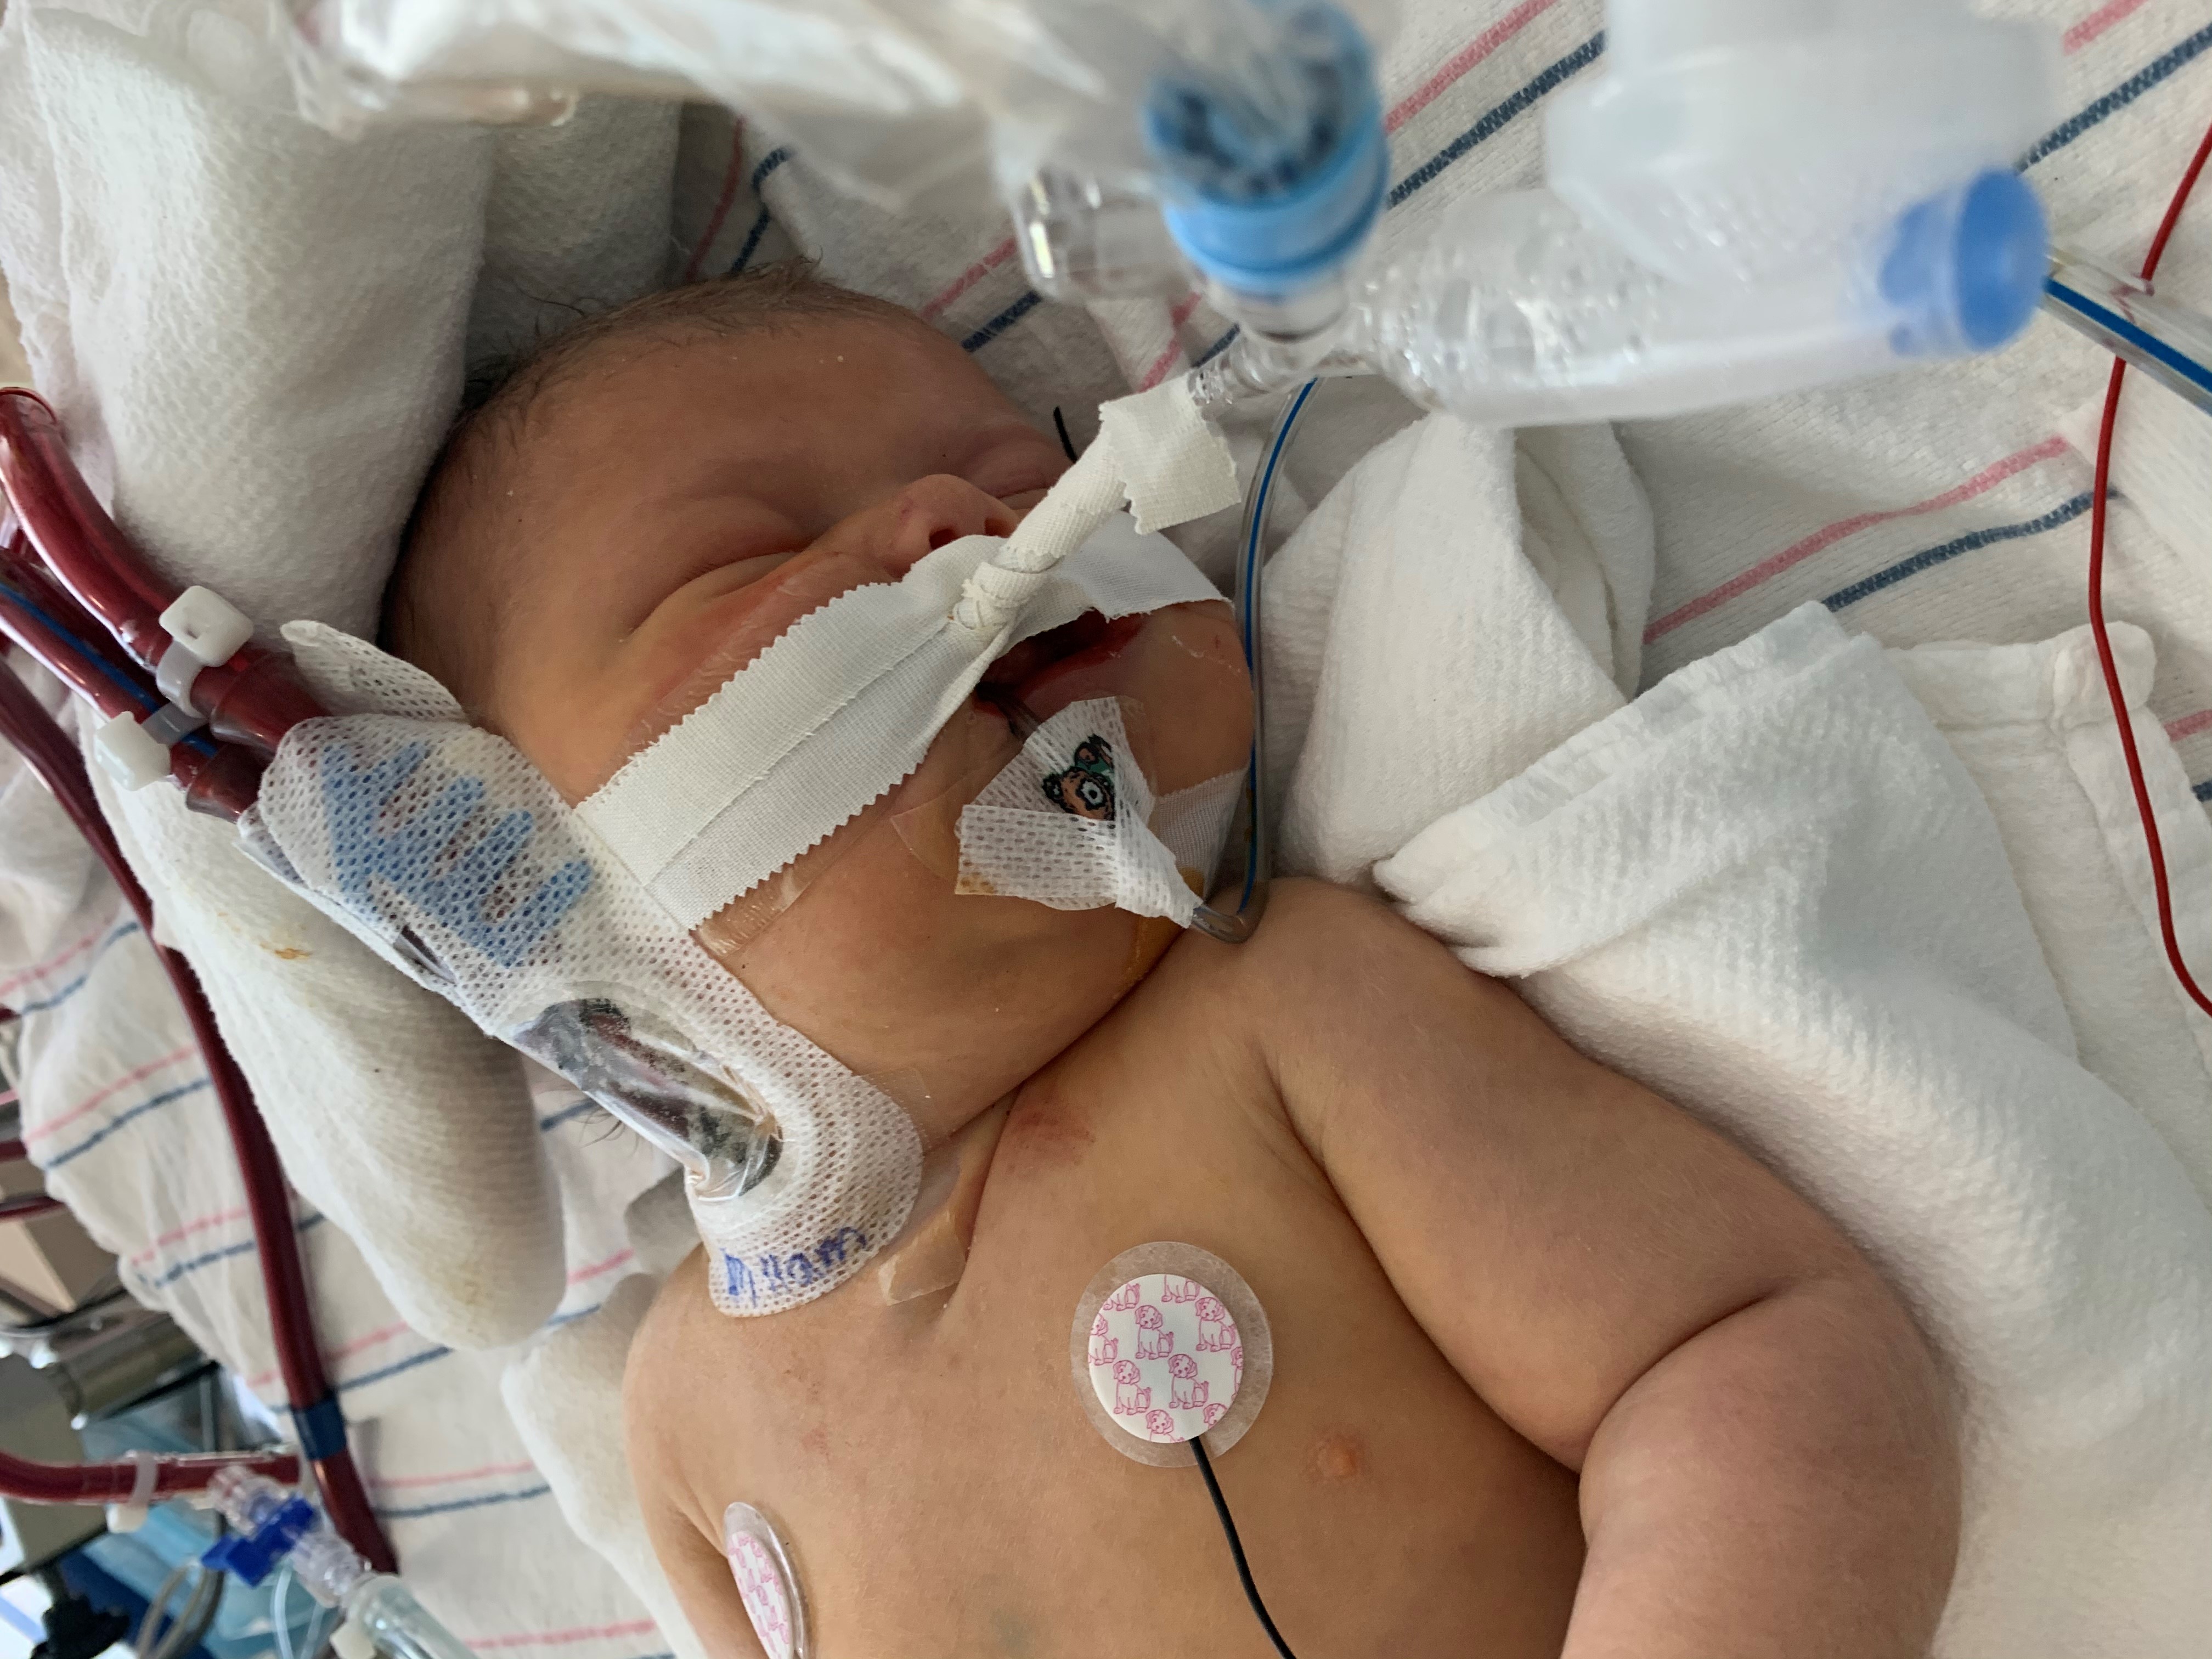 Baby Pierce with on ventilator